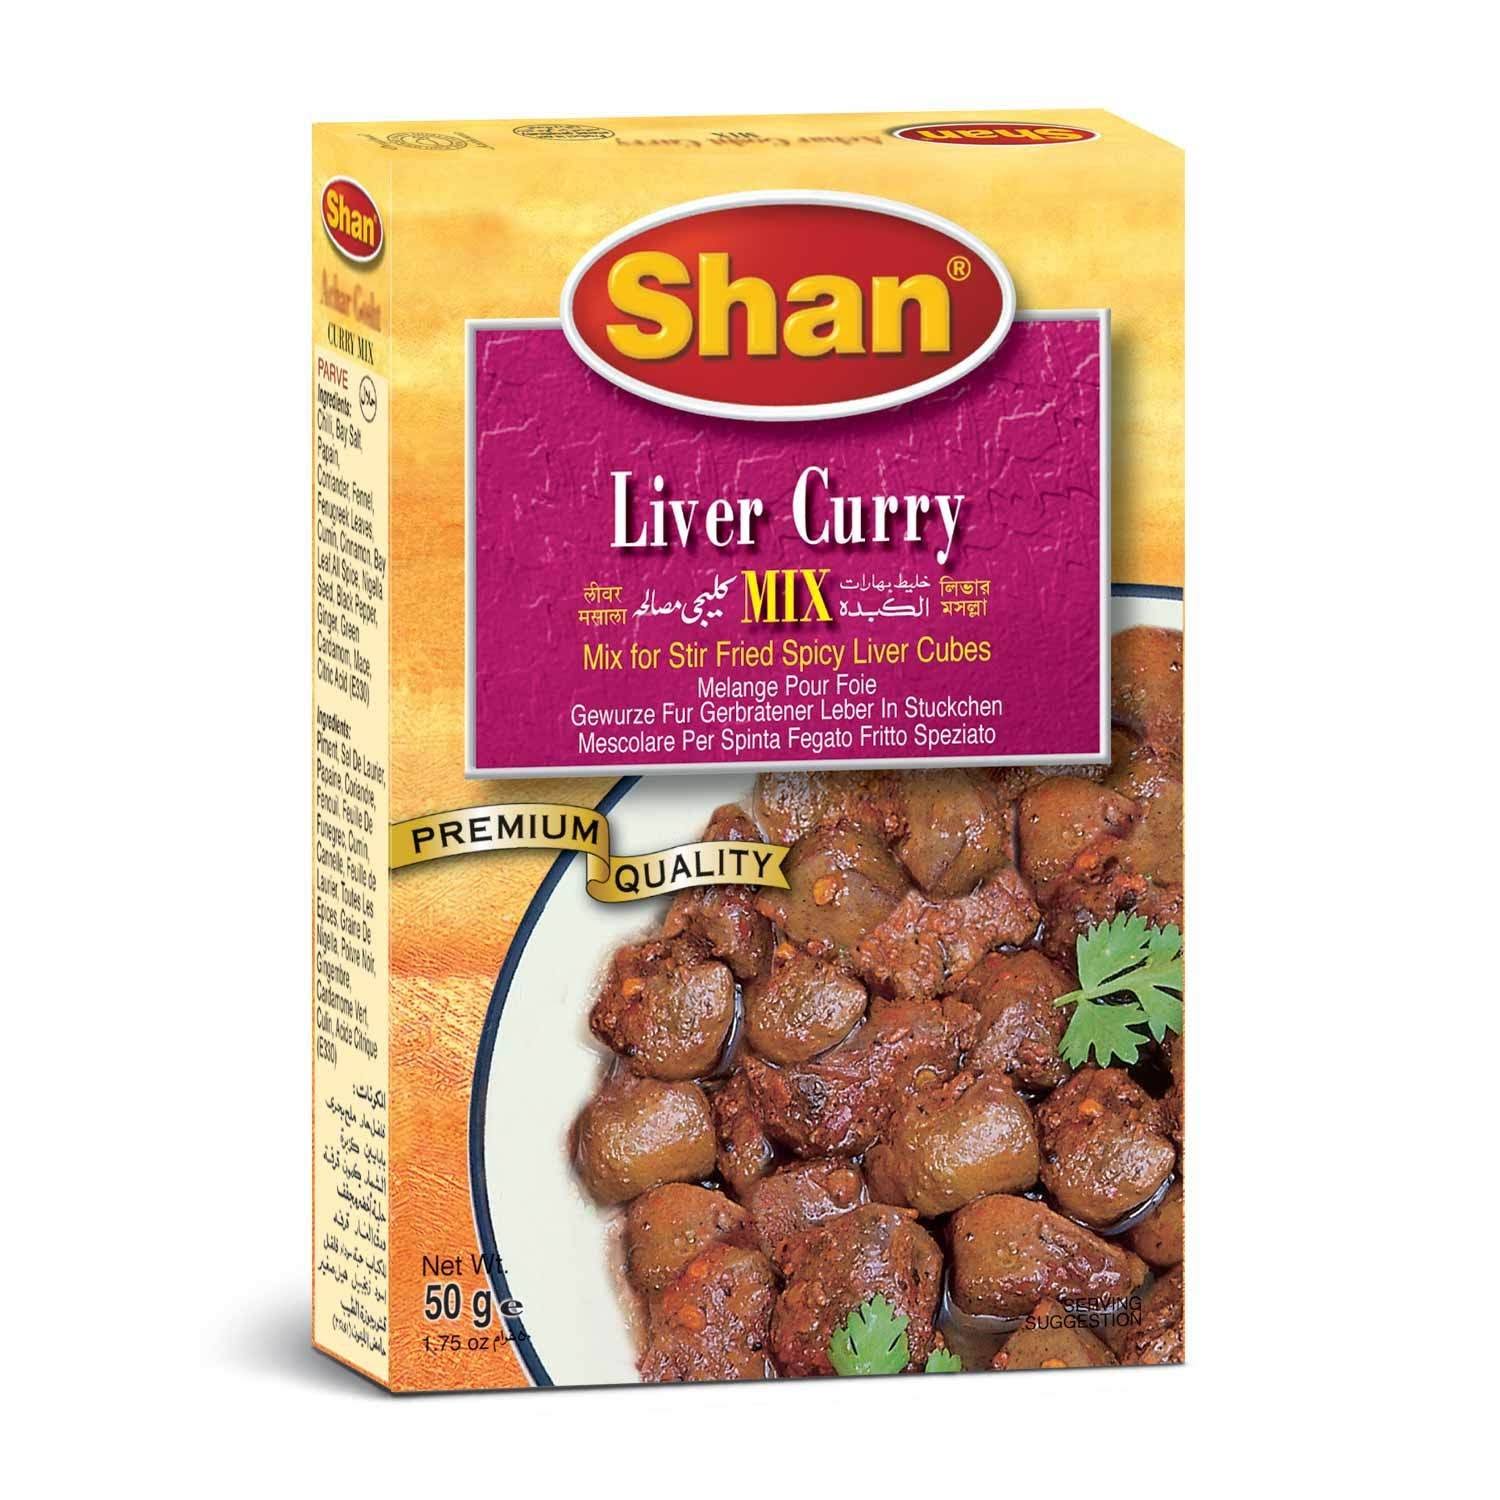 Shan Liver Curry Recipe and Seasoning Mix 1.76 oz (50g) - Spice Powder